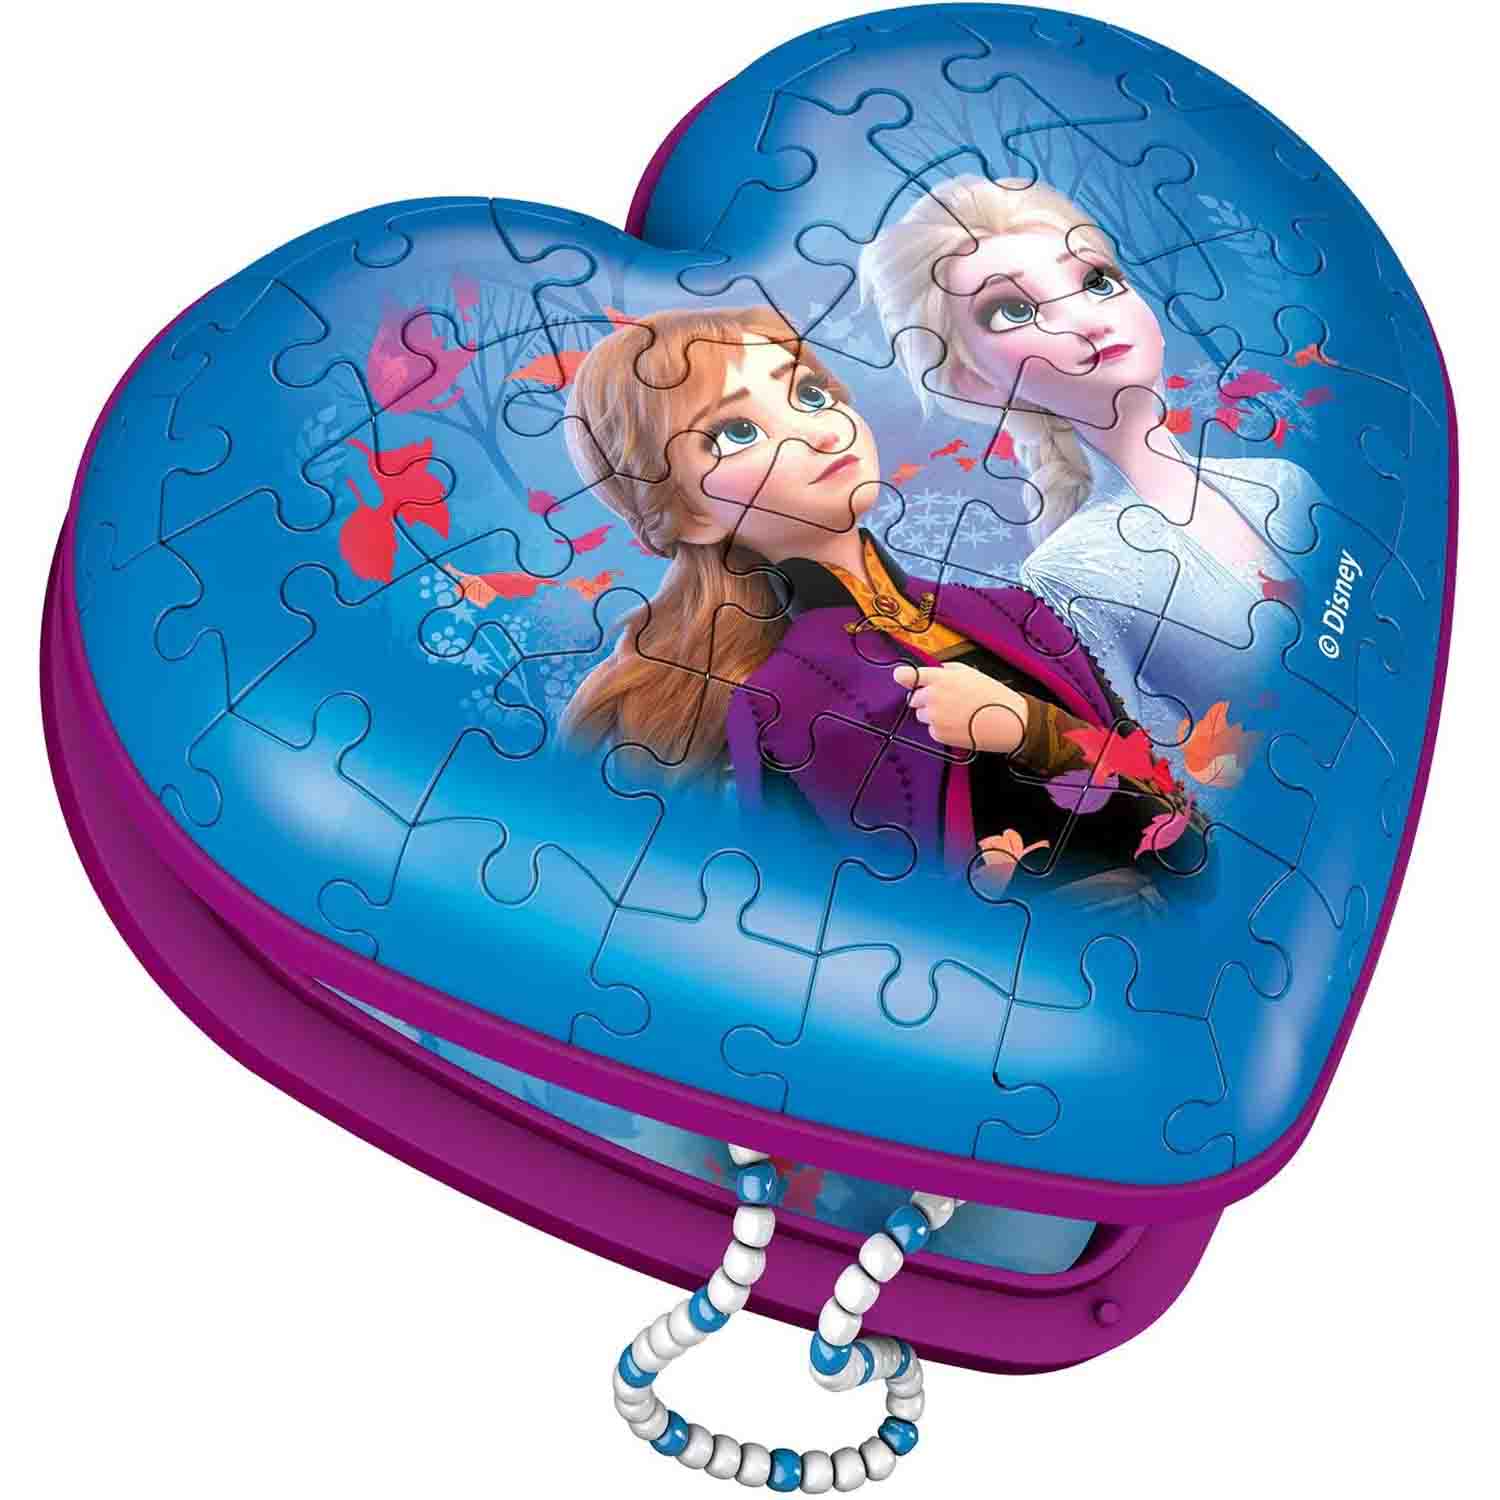 Puzzle cutie in forma de inima Frozen, + 8 ani, 54 piese, Ravensburger